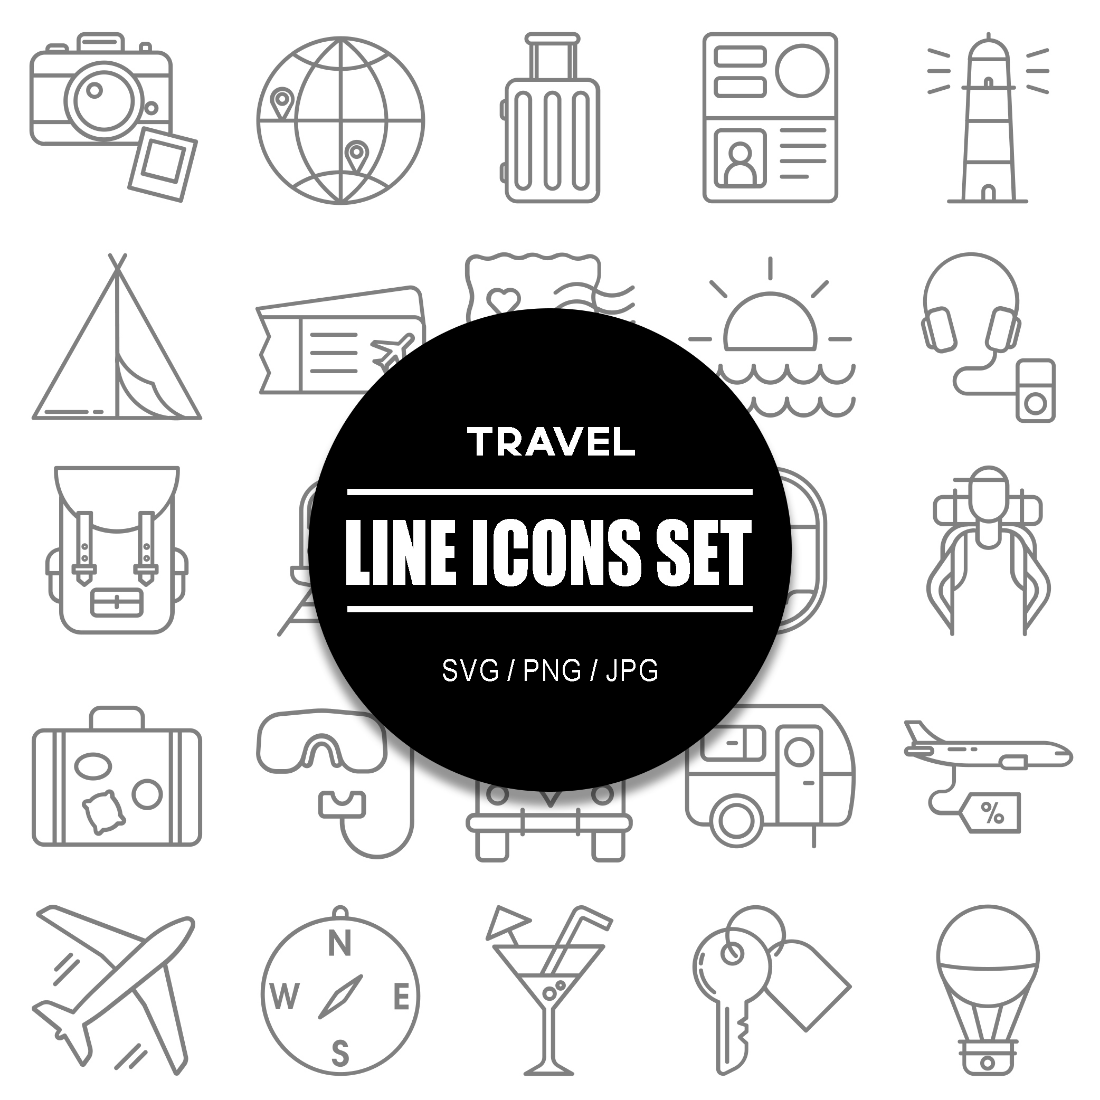 Travel Line Icon Set cover image.